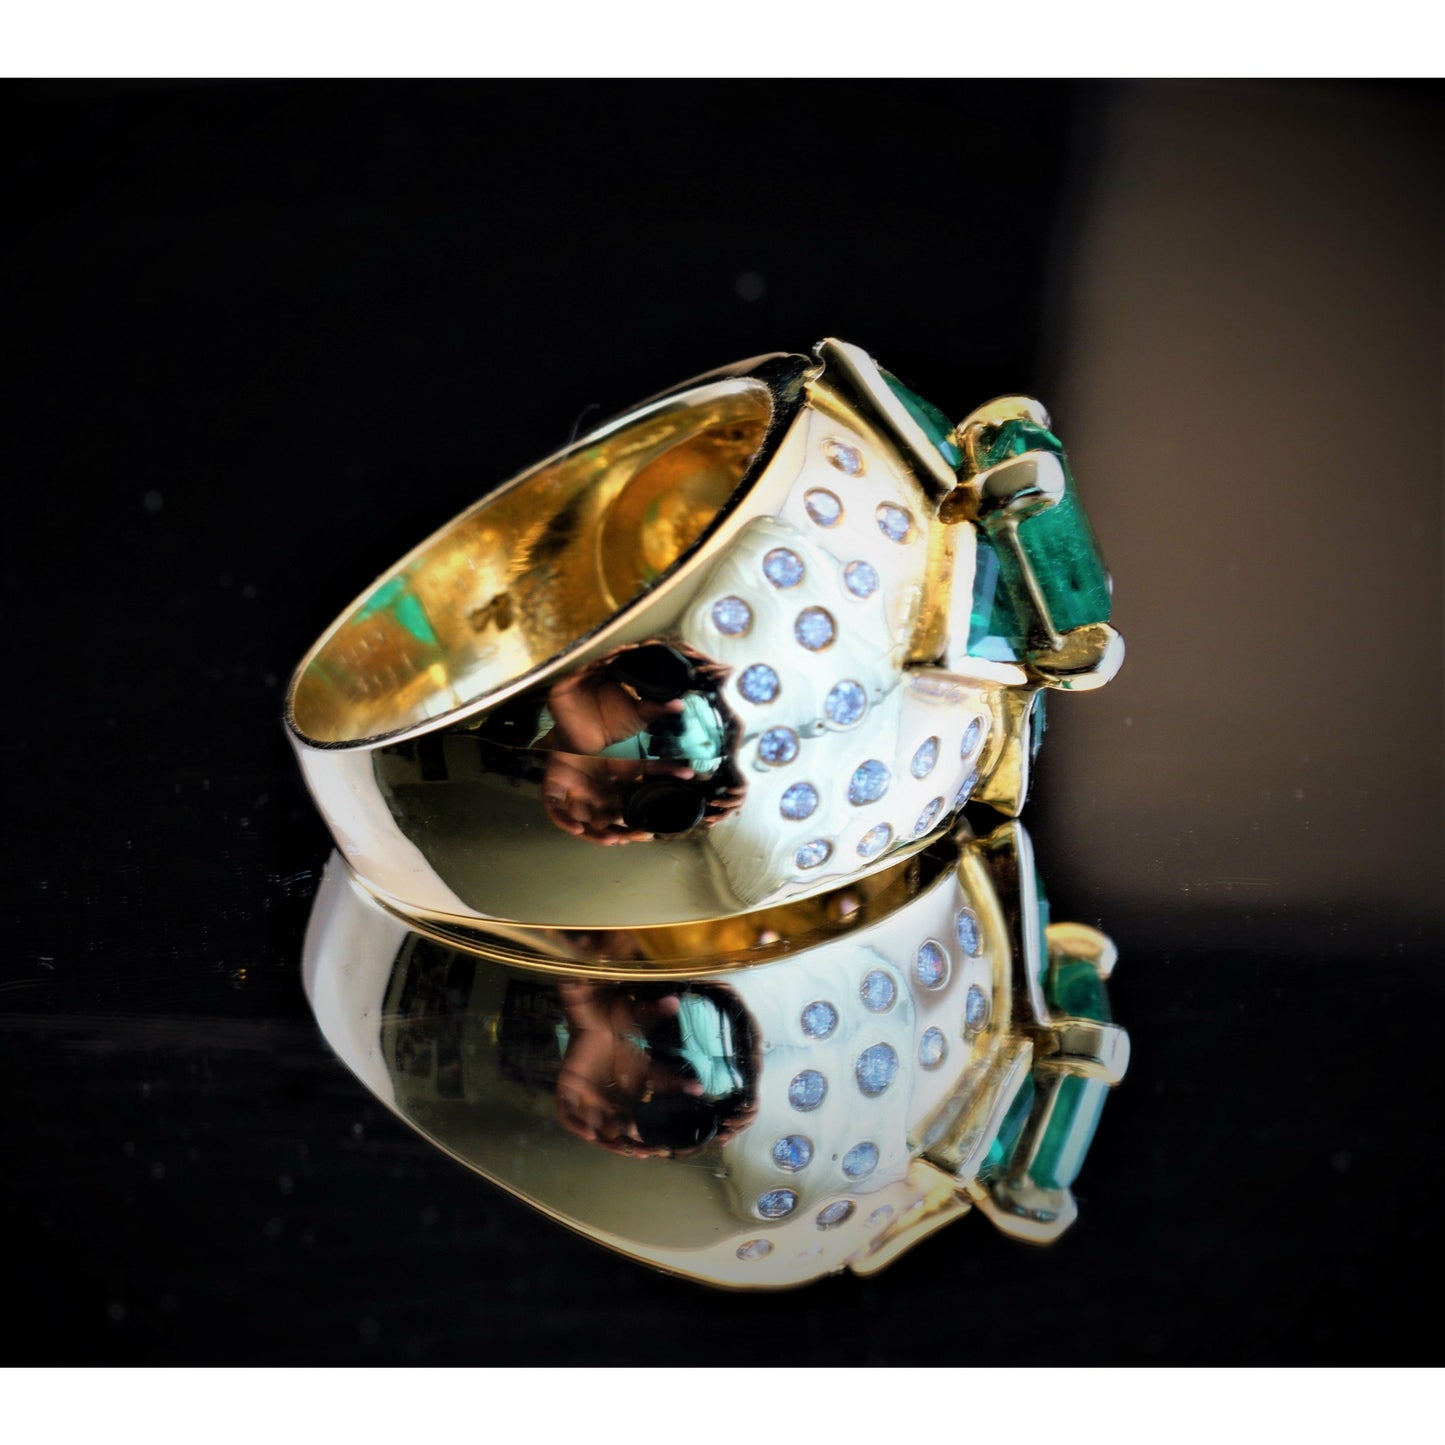 FJL Jewelry Emerald Ring Stunning Emerald Star Shape Ring, 14K Gold, Colombian Emerald Gemstones & Diamonds